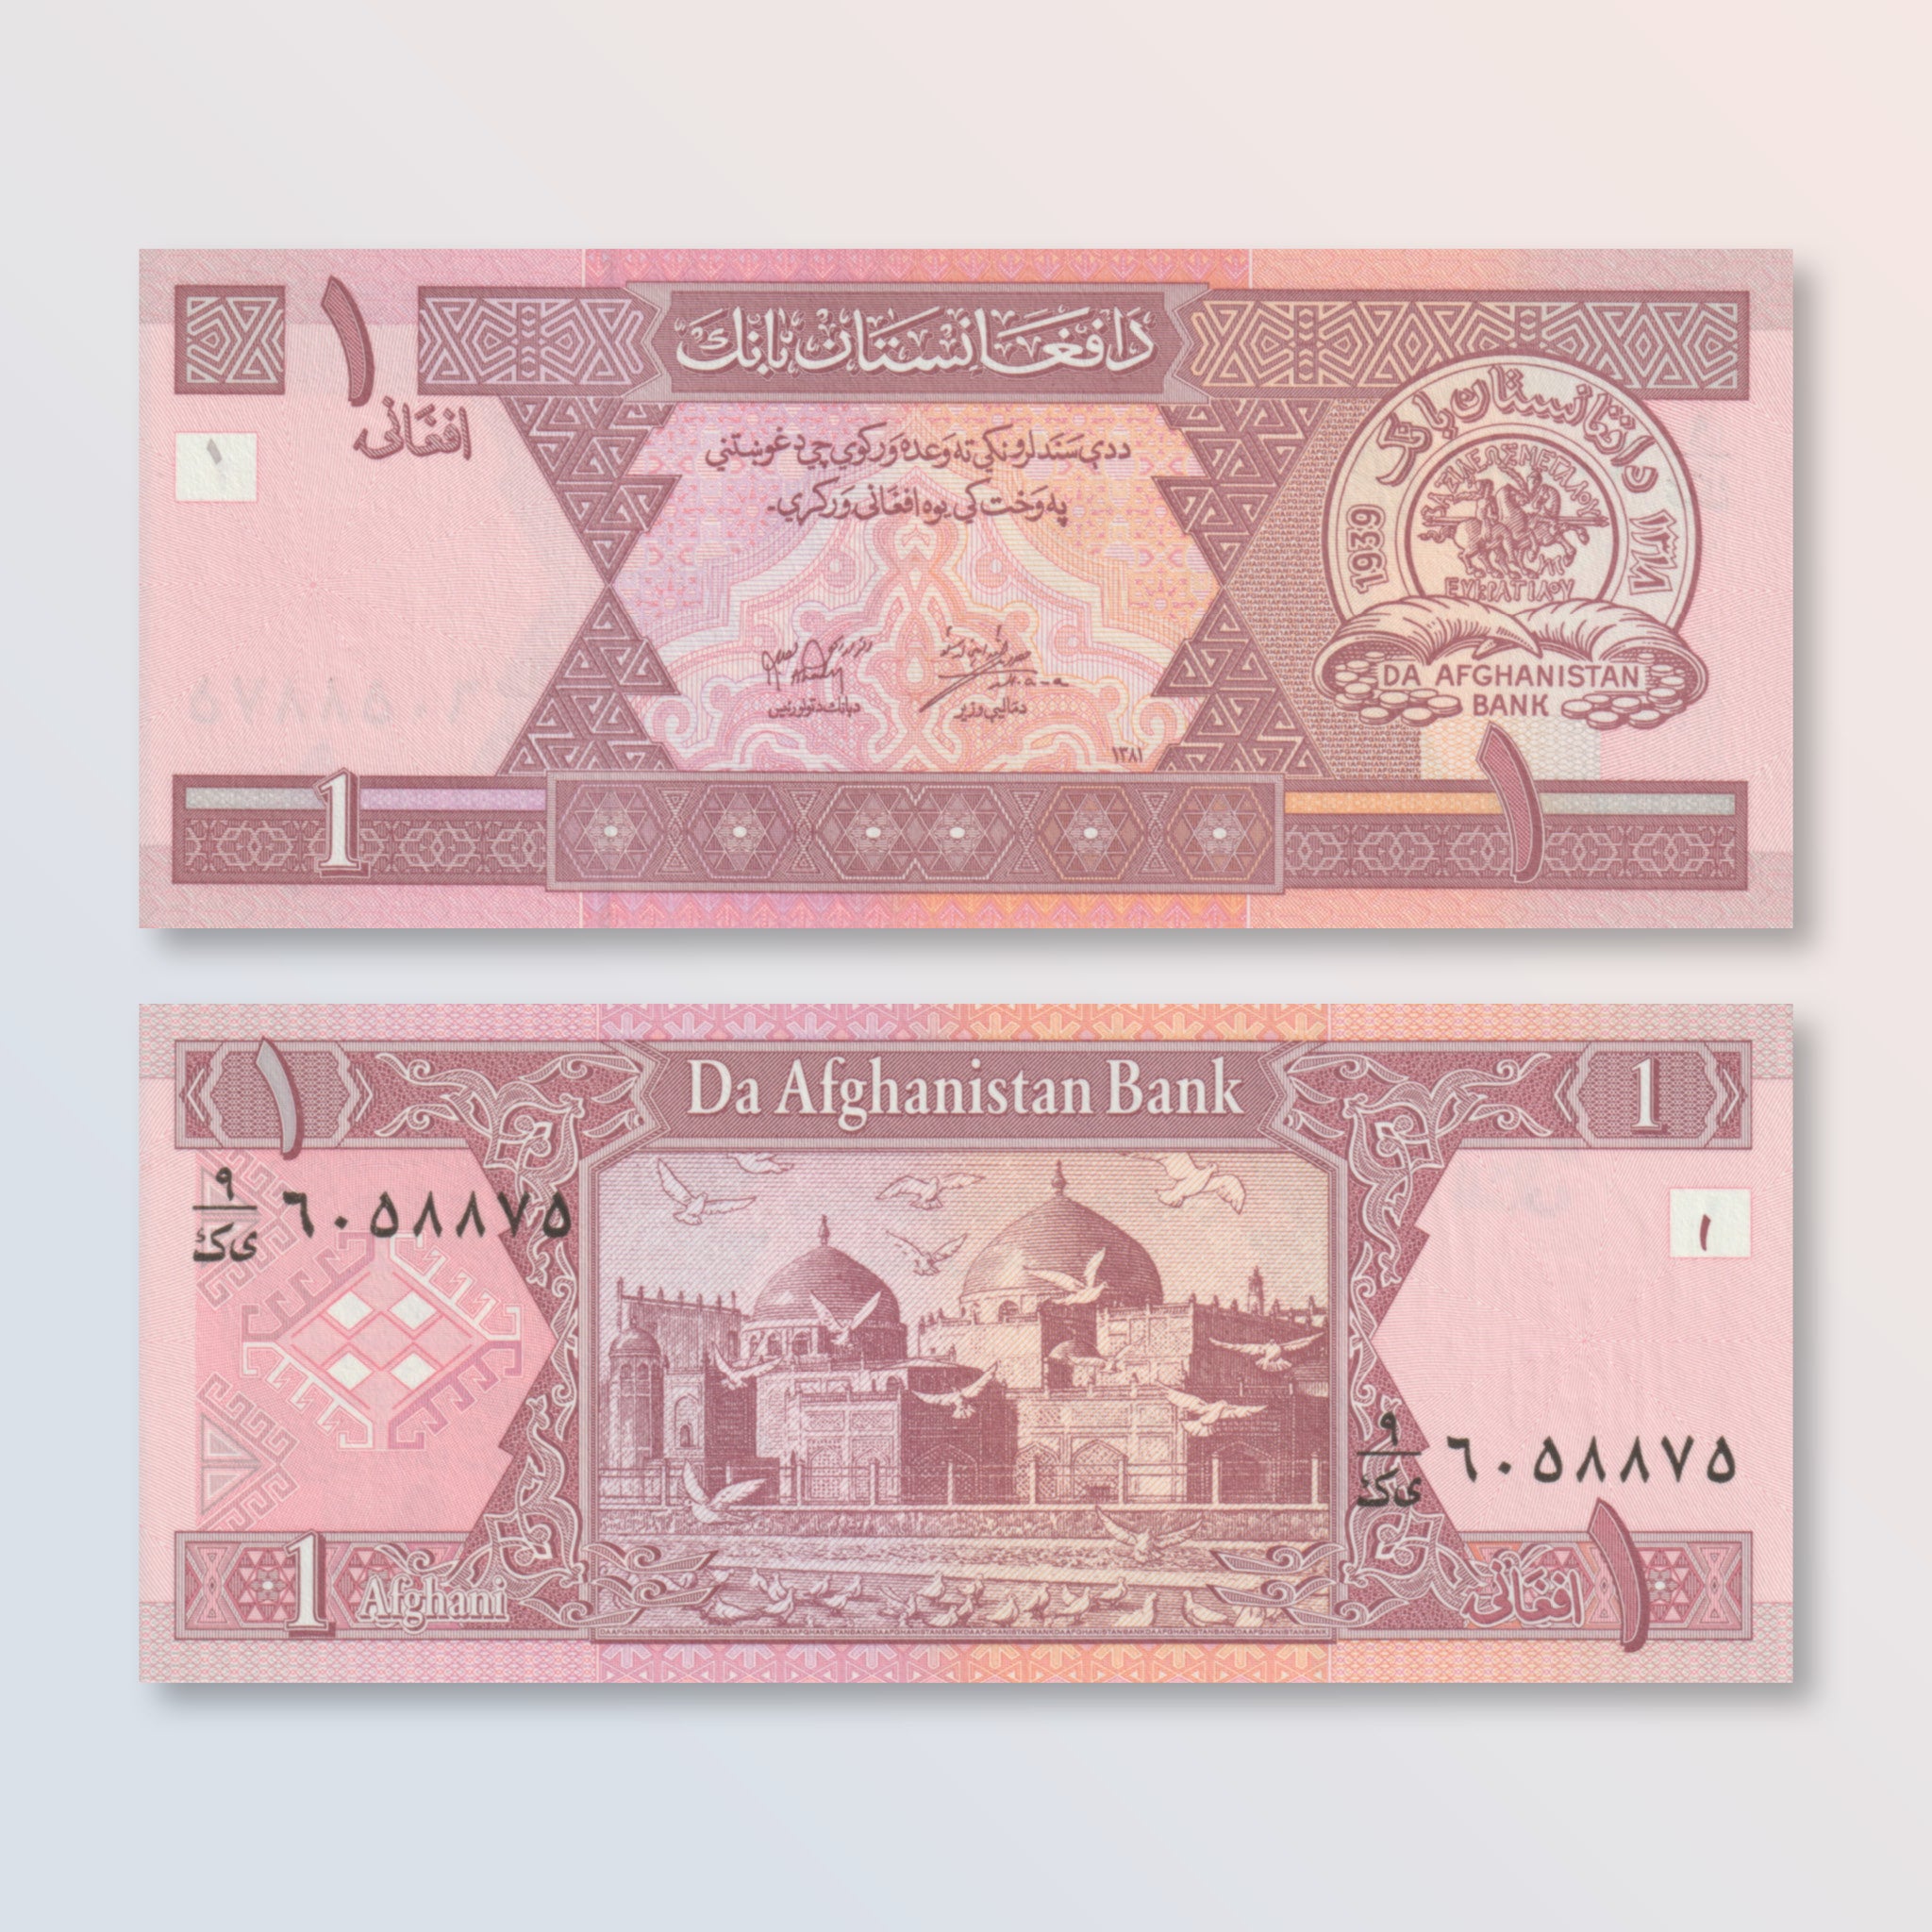 Afghanistan 1 Afghani, 2002, B348a, P64, UNC - Robert's World Money - World Banknotes